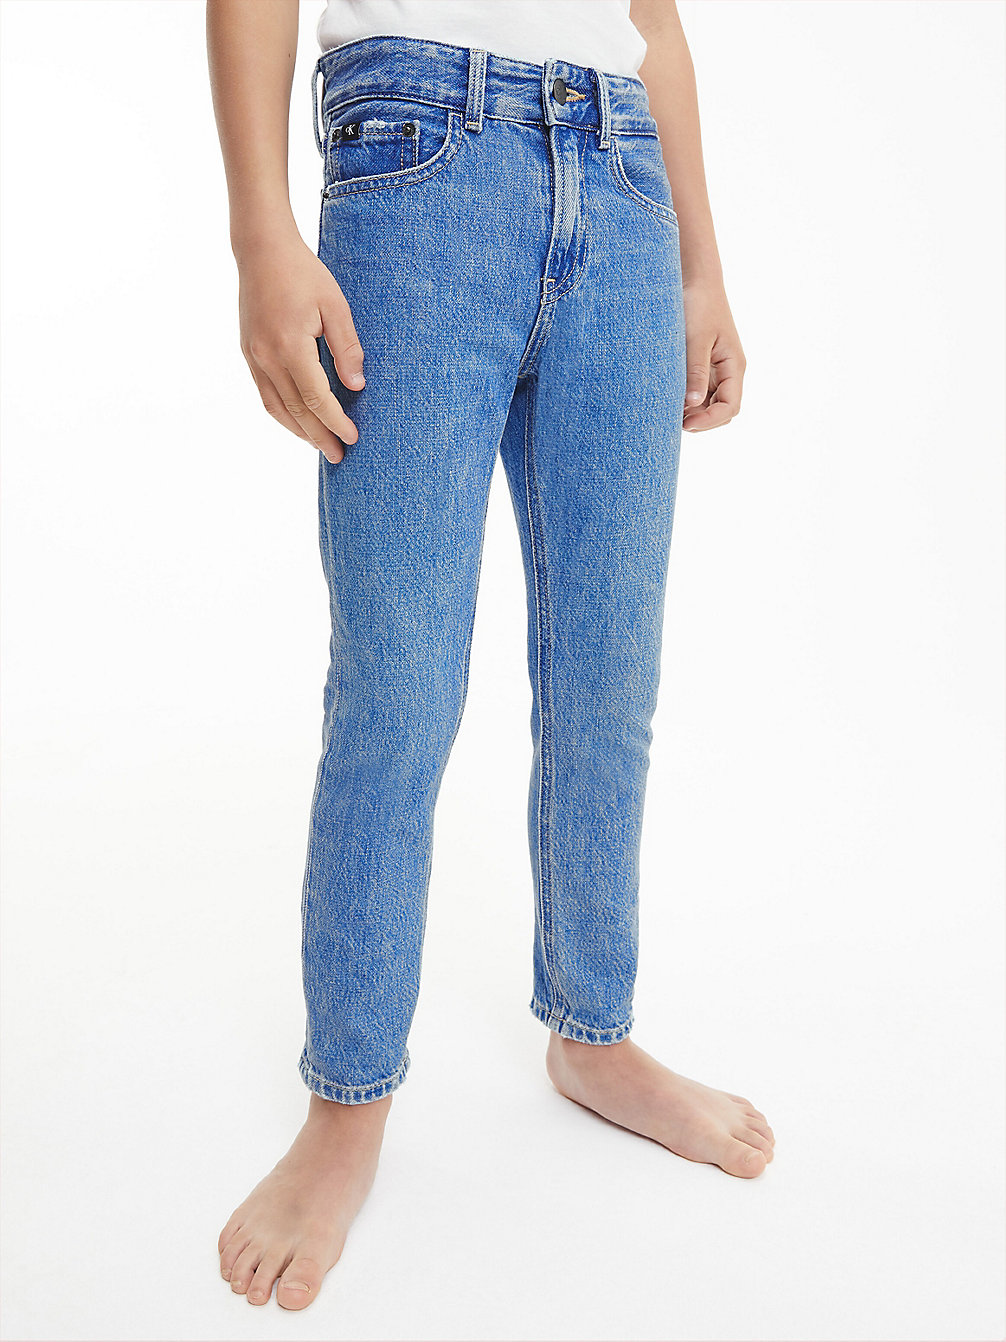 BRIGHT BLUE Dad Jeans undefined boys Calvin Klein